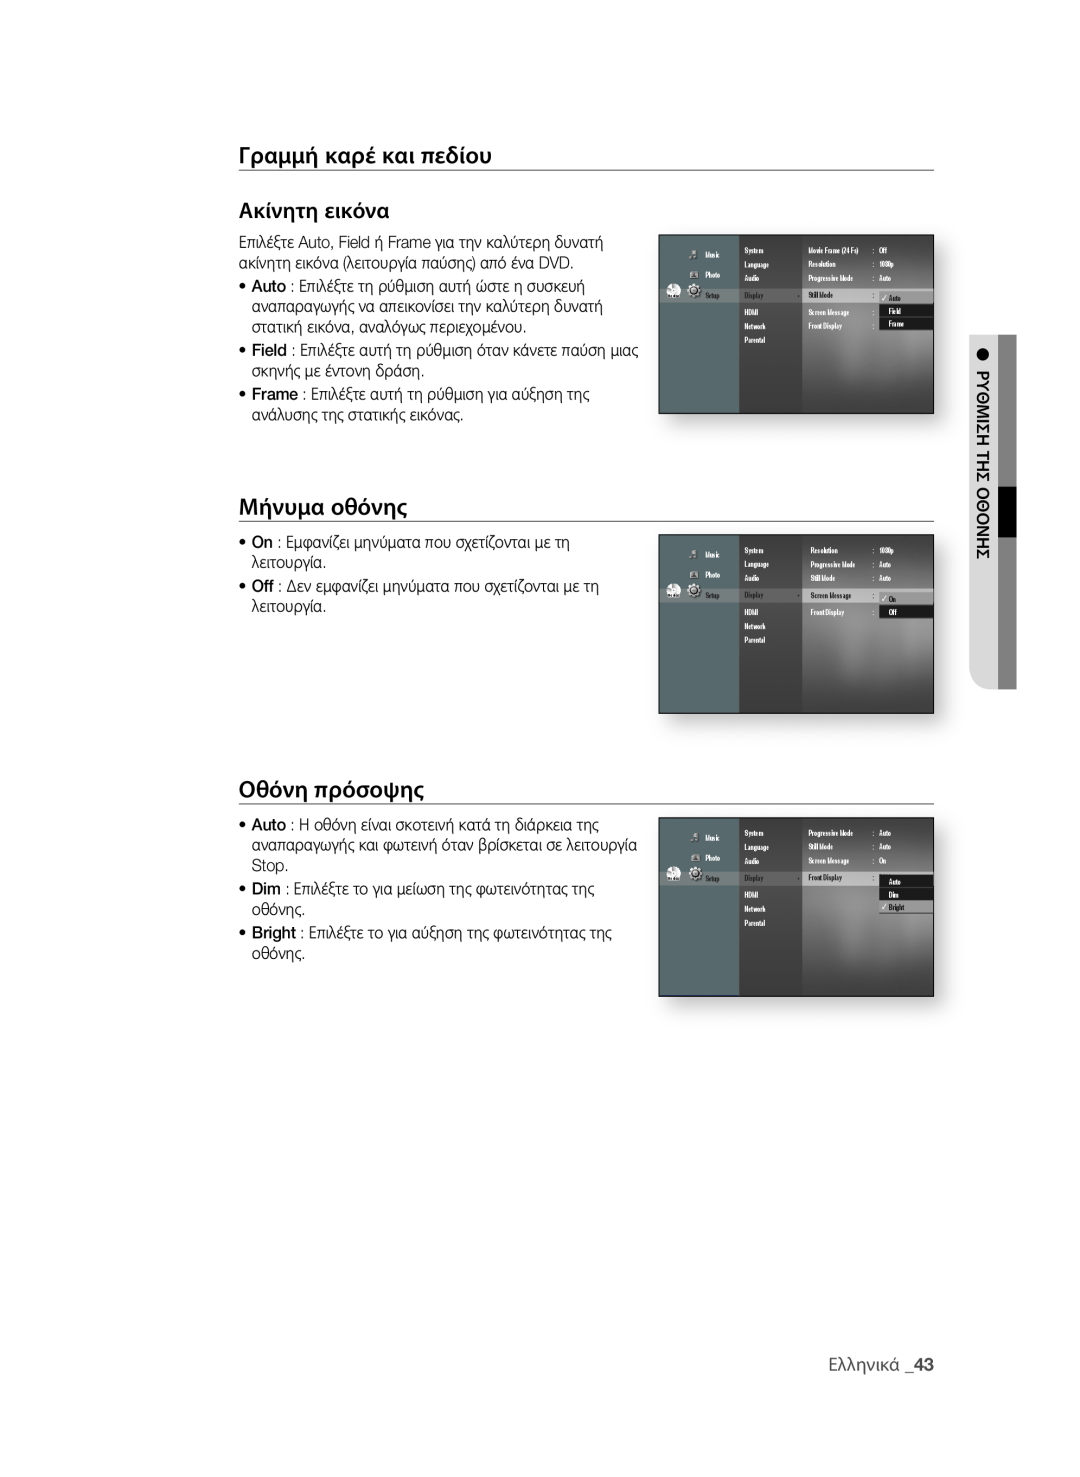 Samsung BD-P1580/EDC Γραμμή καρέ και πεδίου Ακίνητη εικόνα, Μήνυμα οθόνης, οθόνη πρόσοψης, Ελληνικά 3, λειτουργία, Stop 